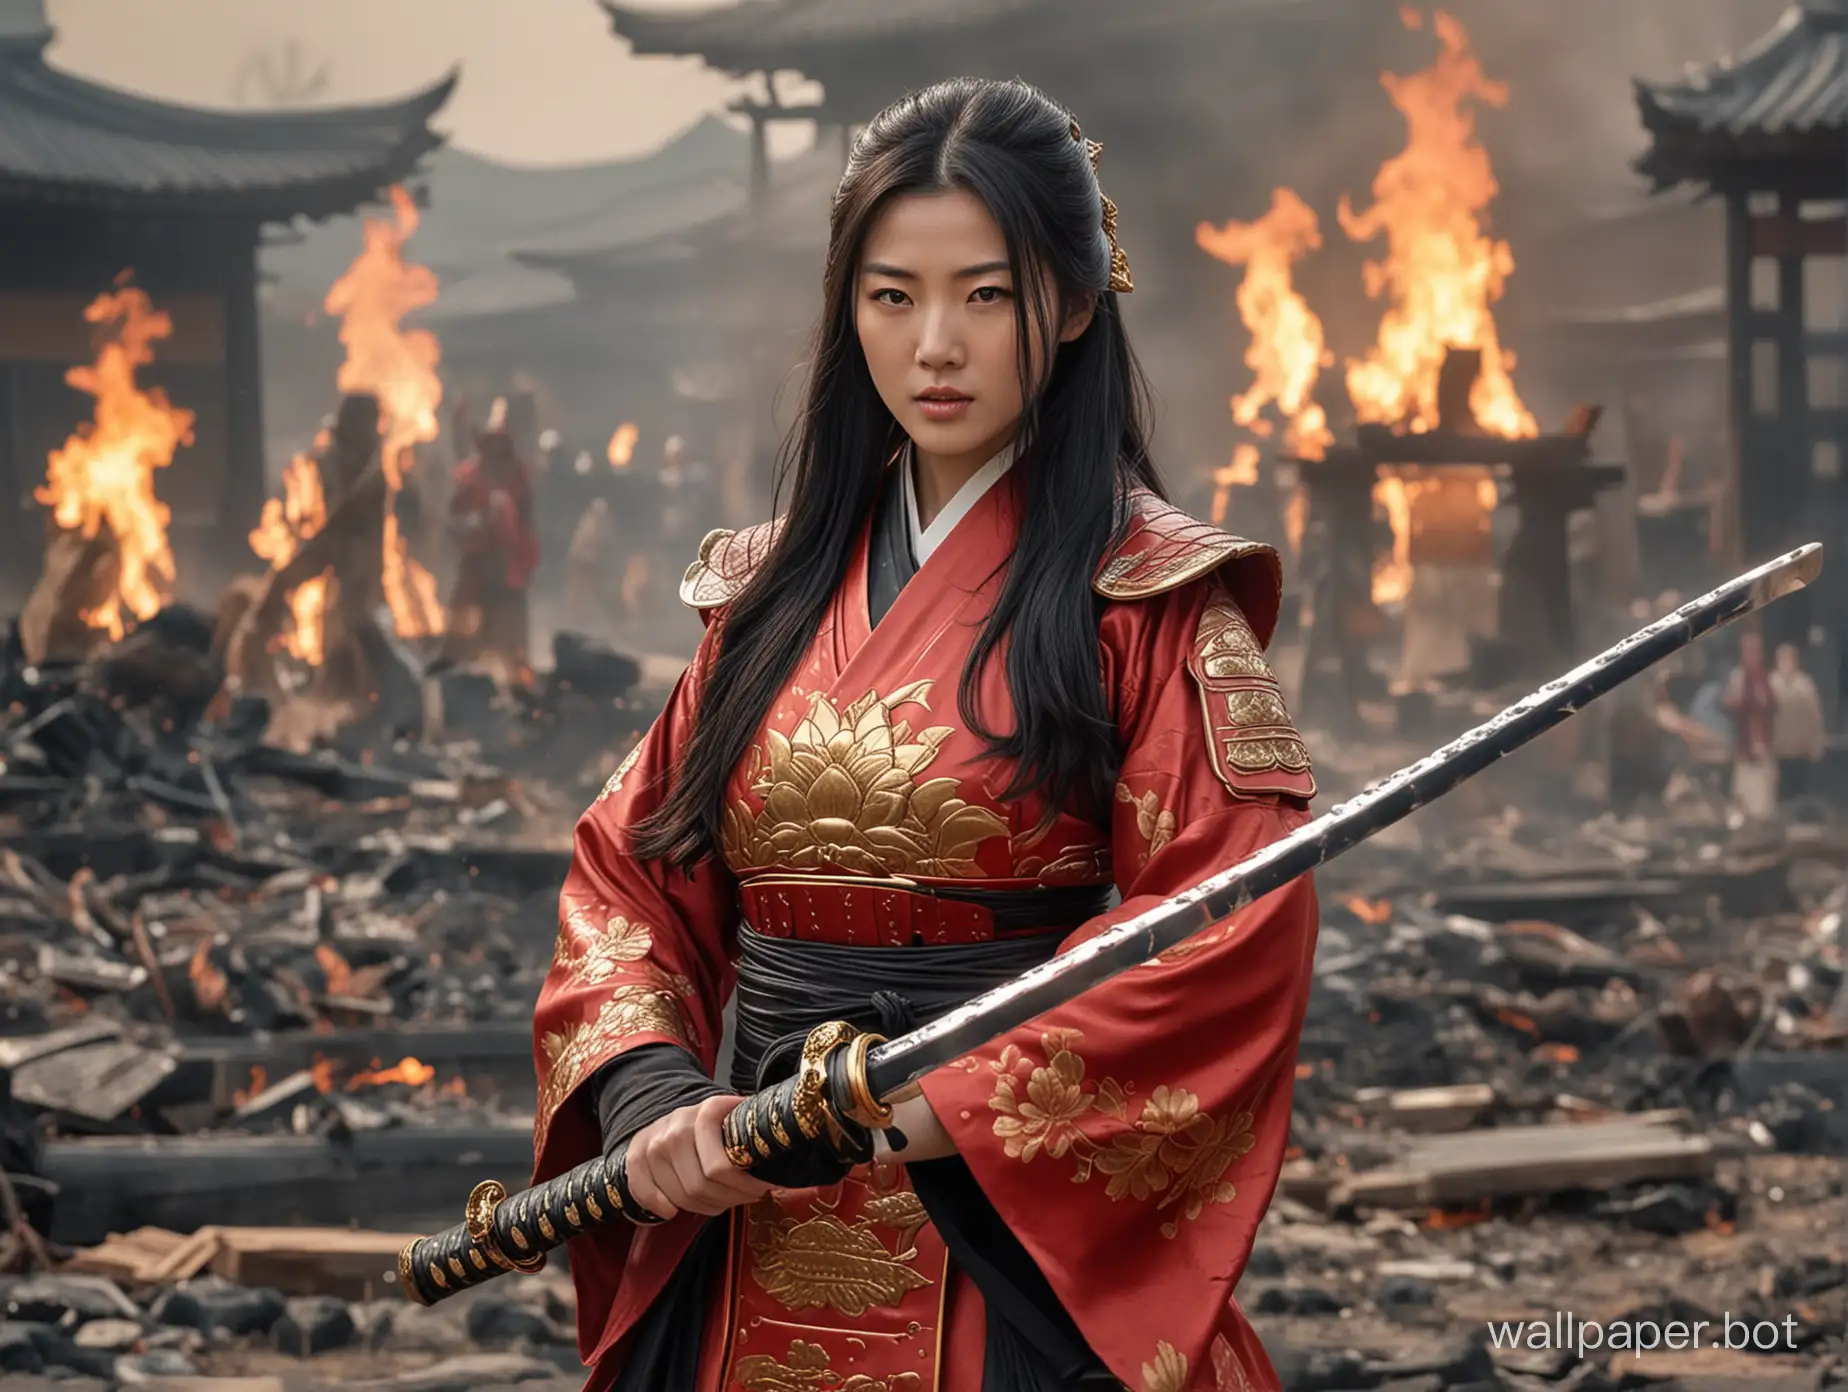 Epic-Battle-of-the-Female-Samurai-Jun-Jihyun-Wielding-Flame-Katana-in-Burning-Edo-City